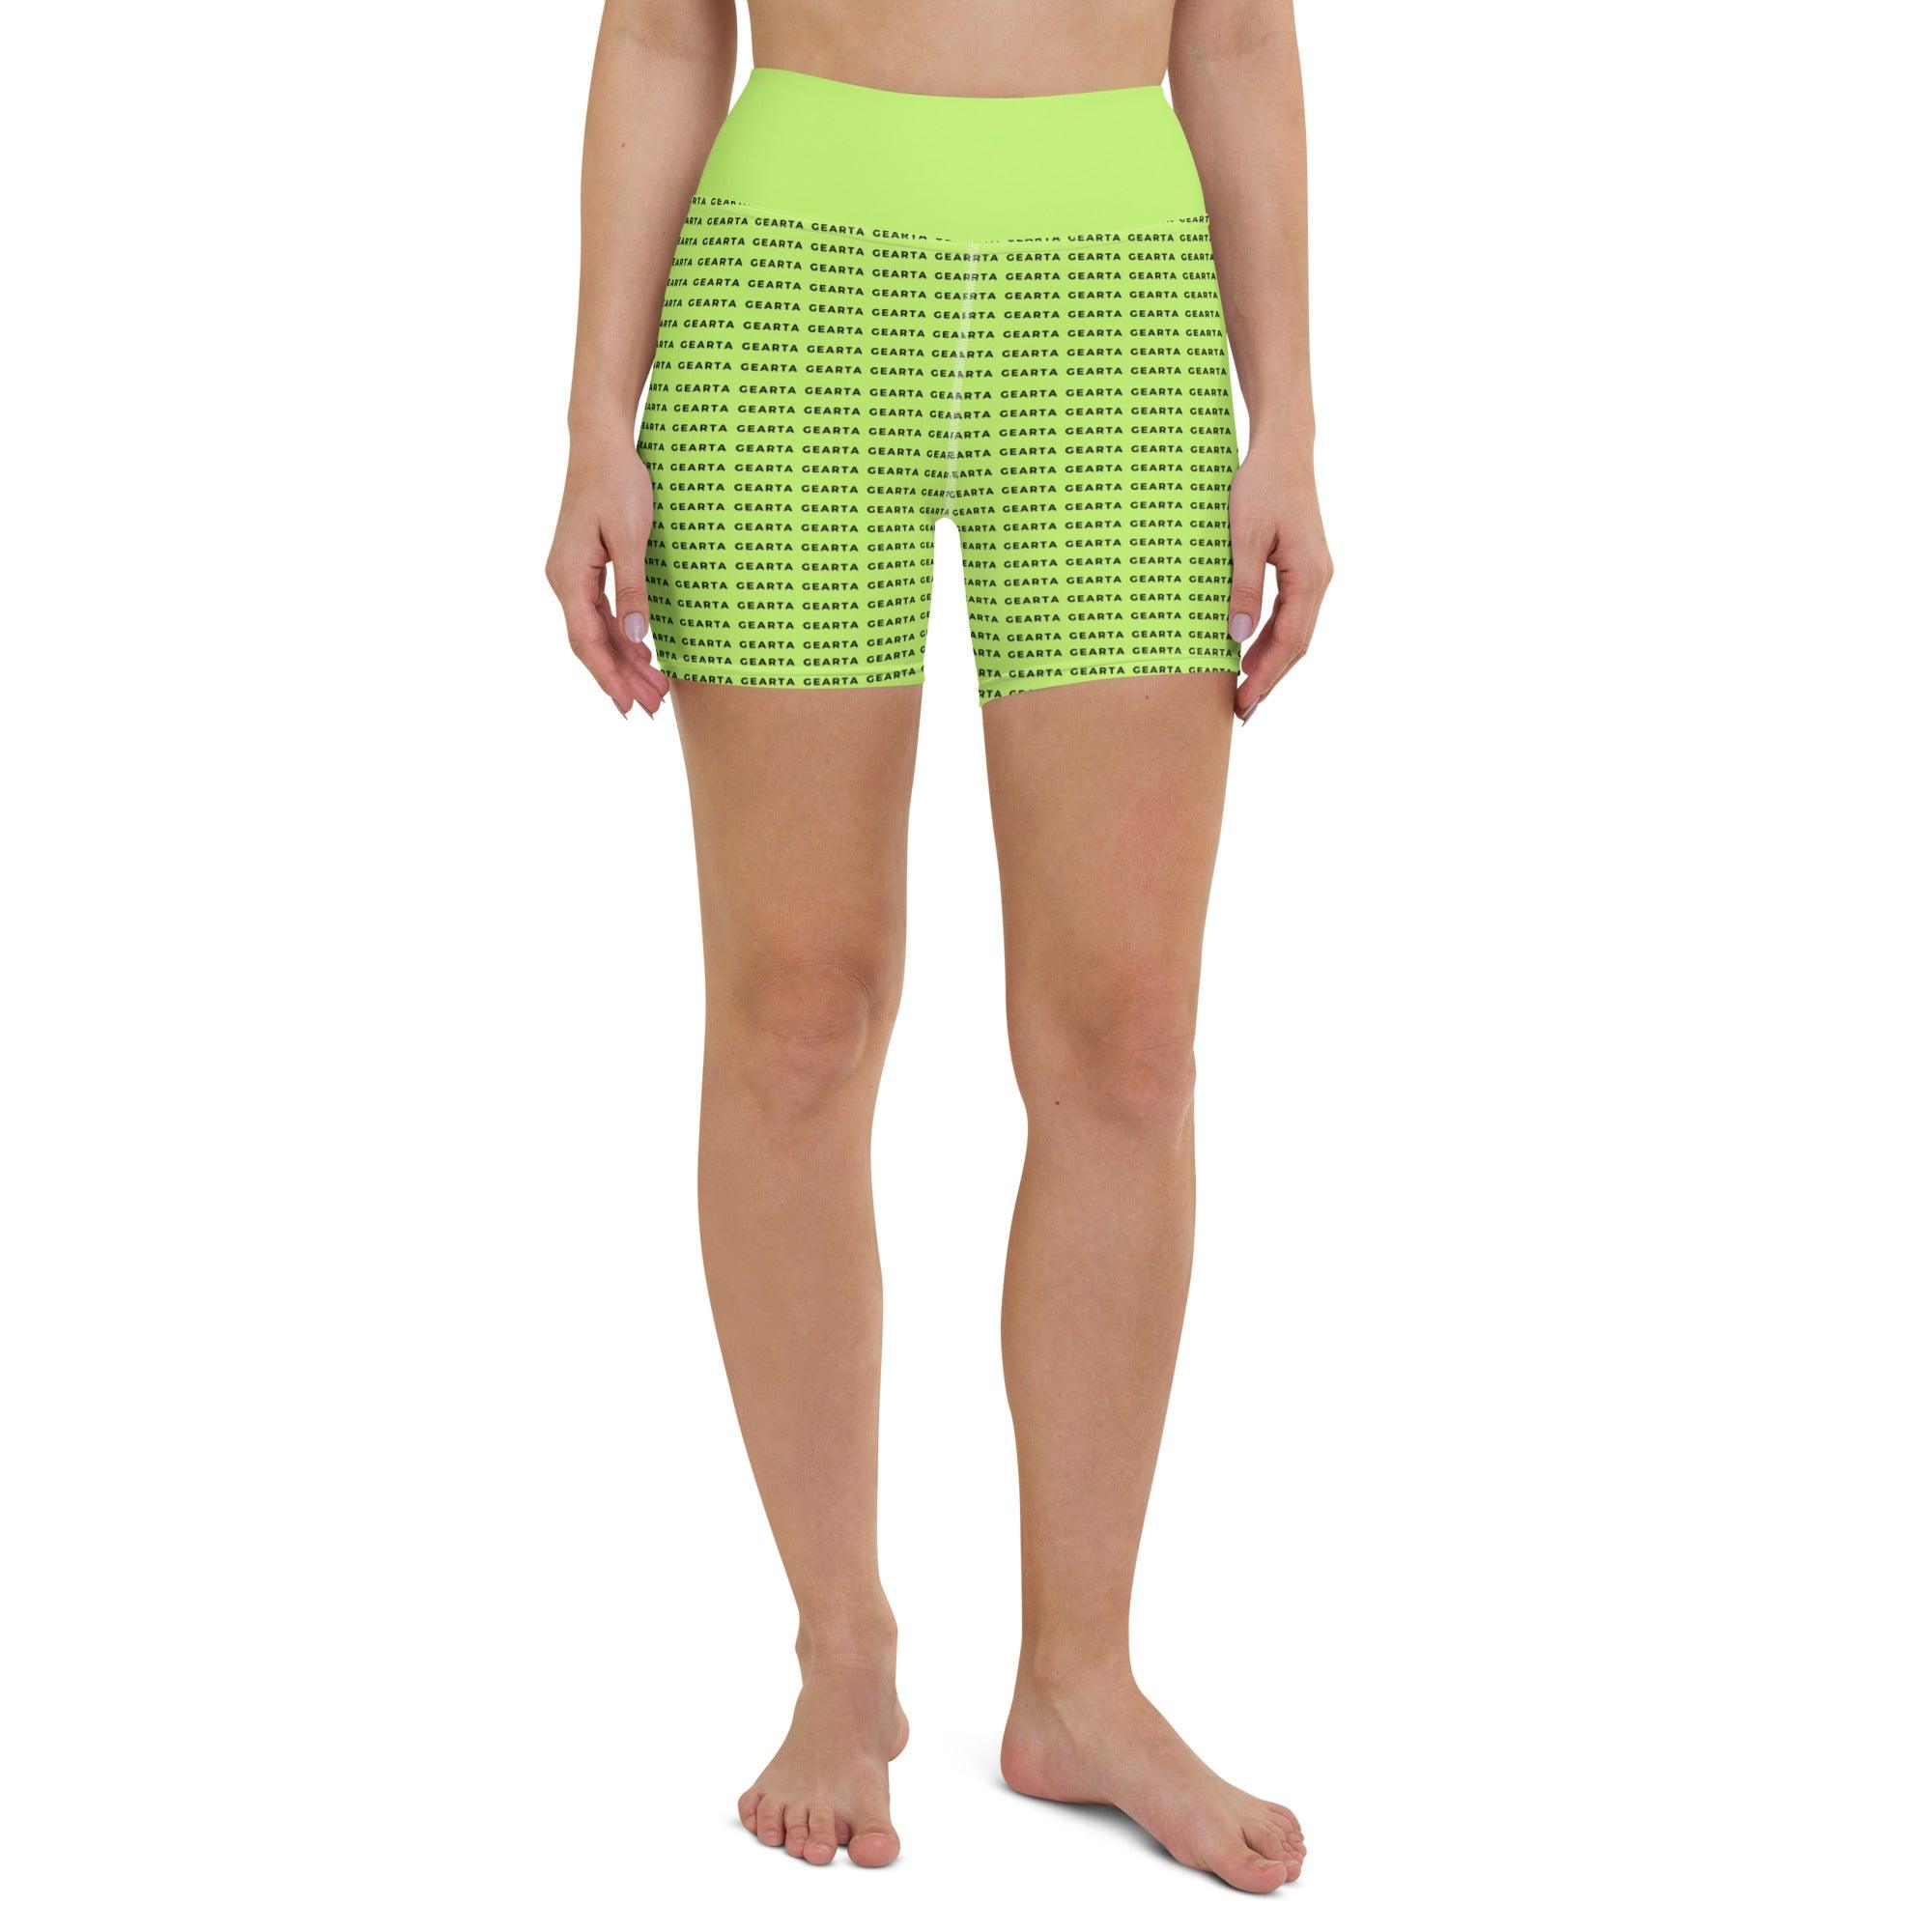 GEARTA - Neon Green Patterned Yoga Shorts